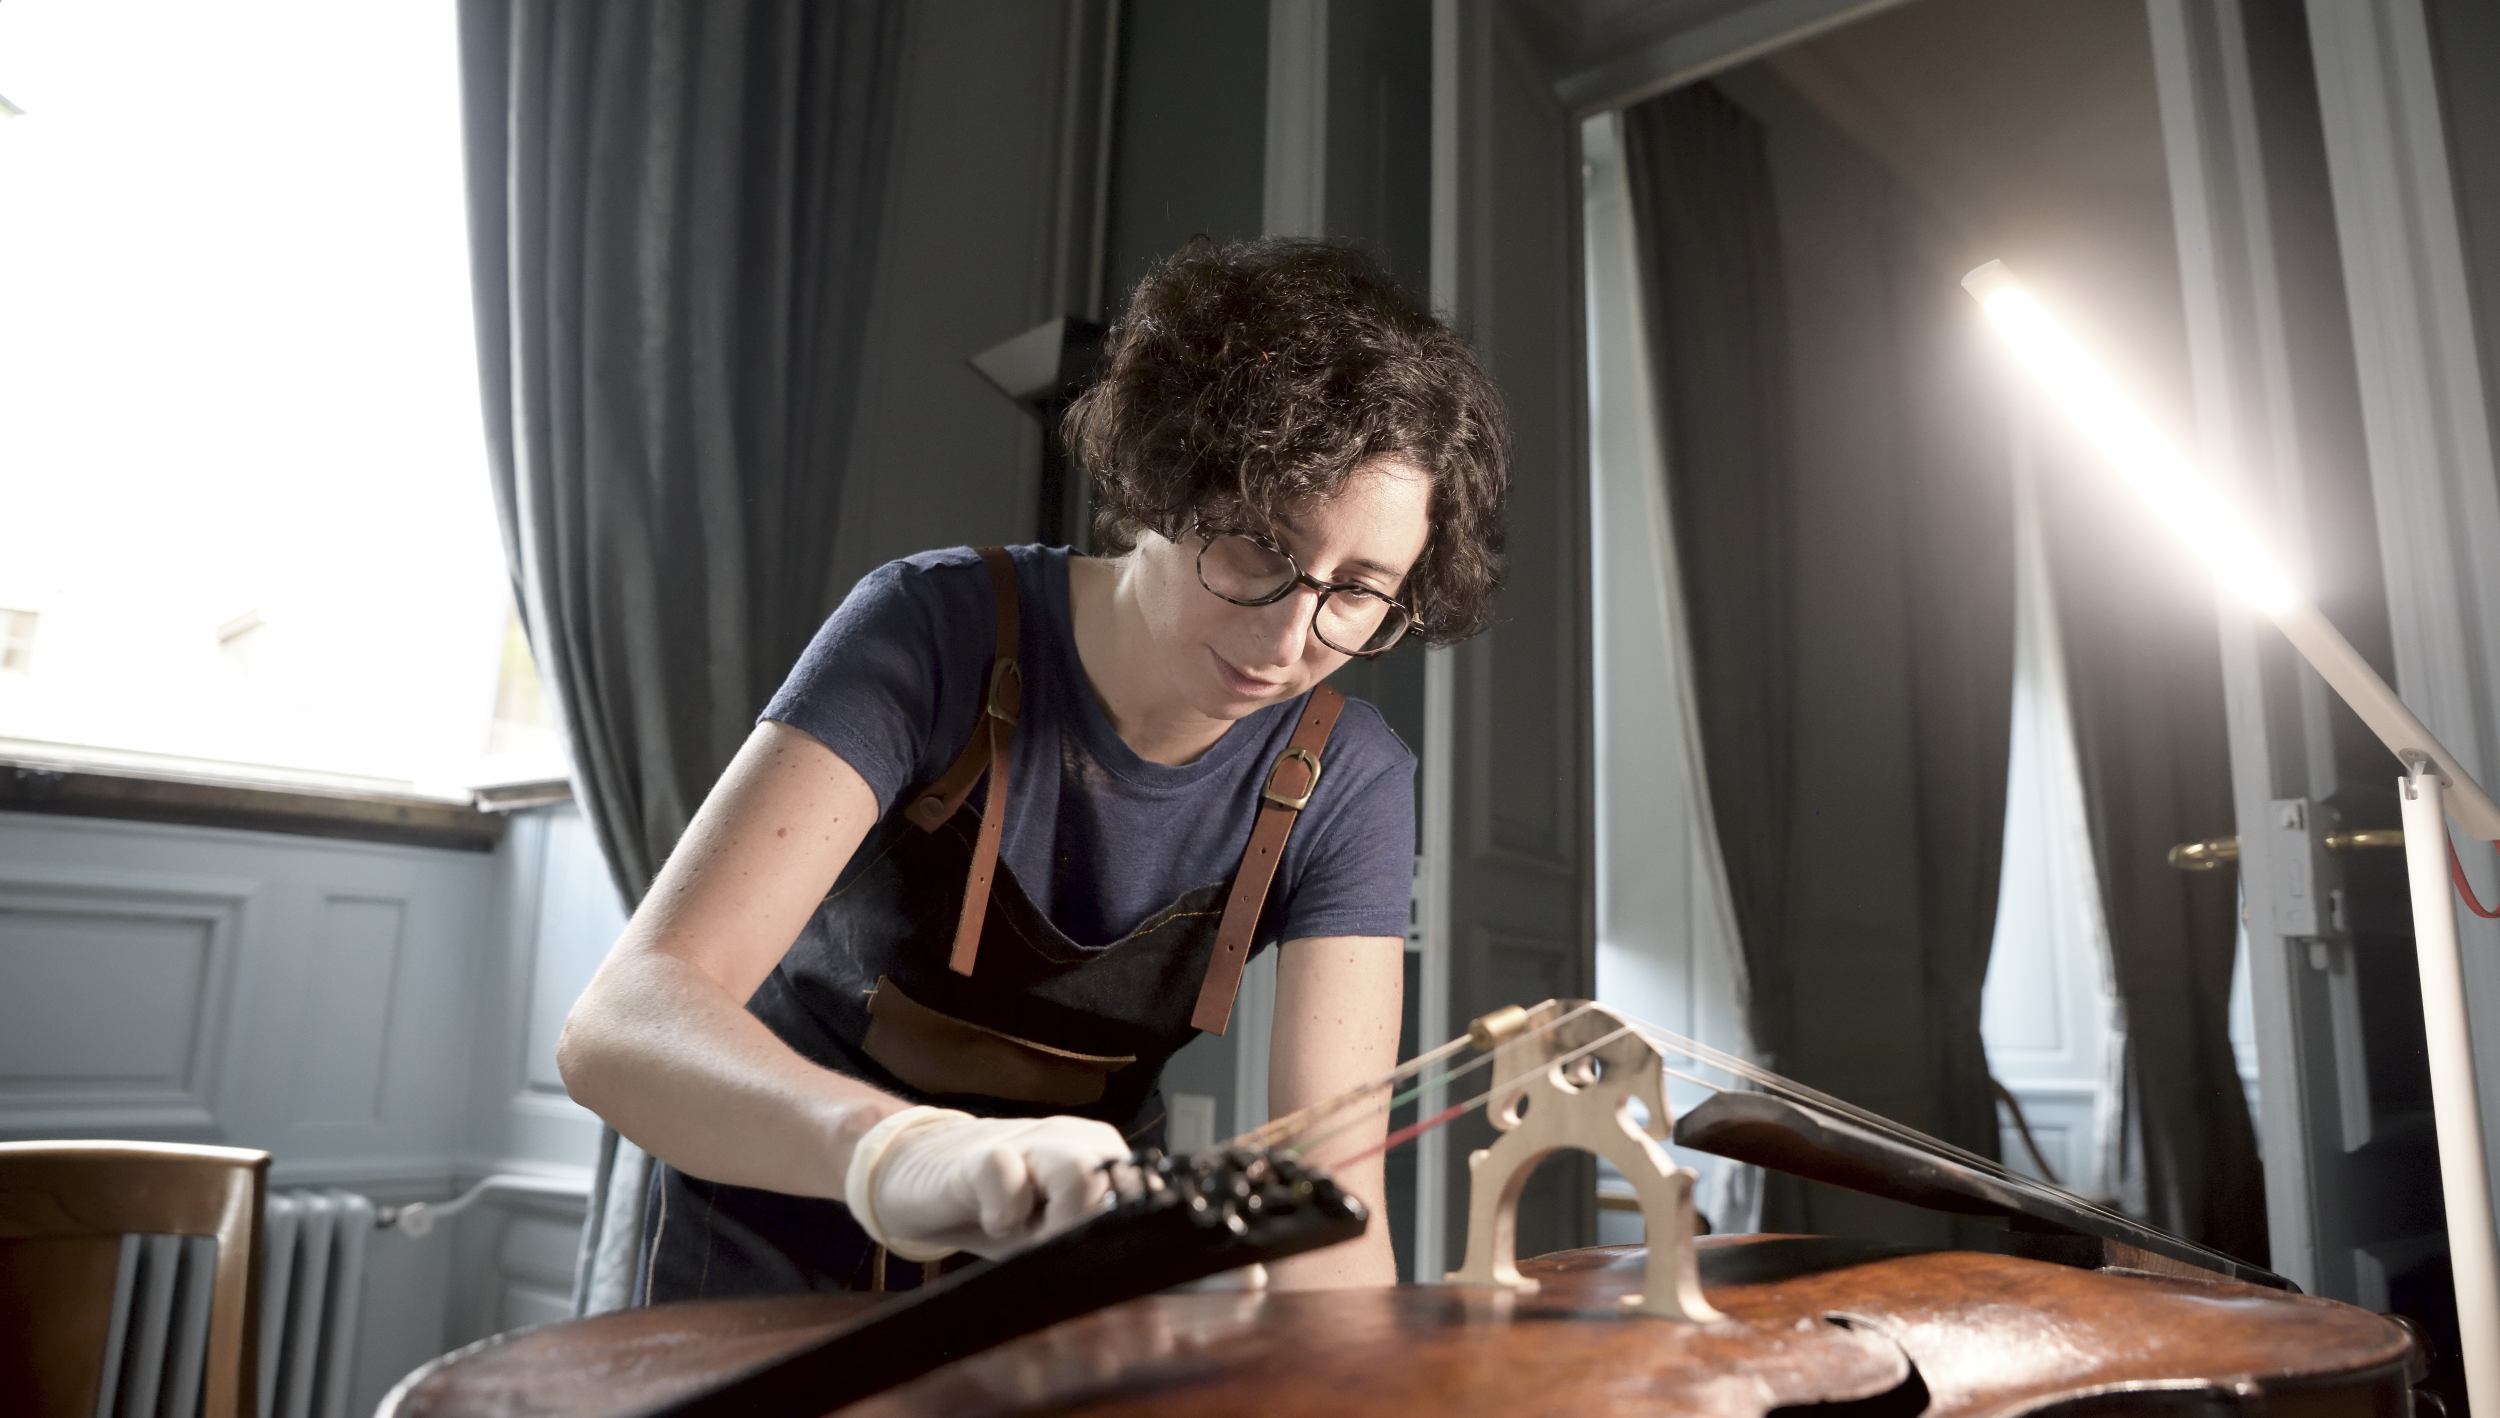 Sandrine Osman - Sandrine Osman - eye glass - Geneva International String Academy - Cleaning a cello